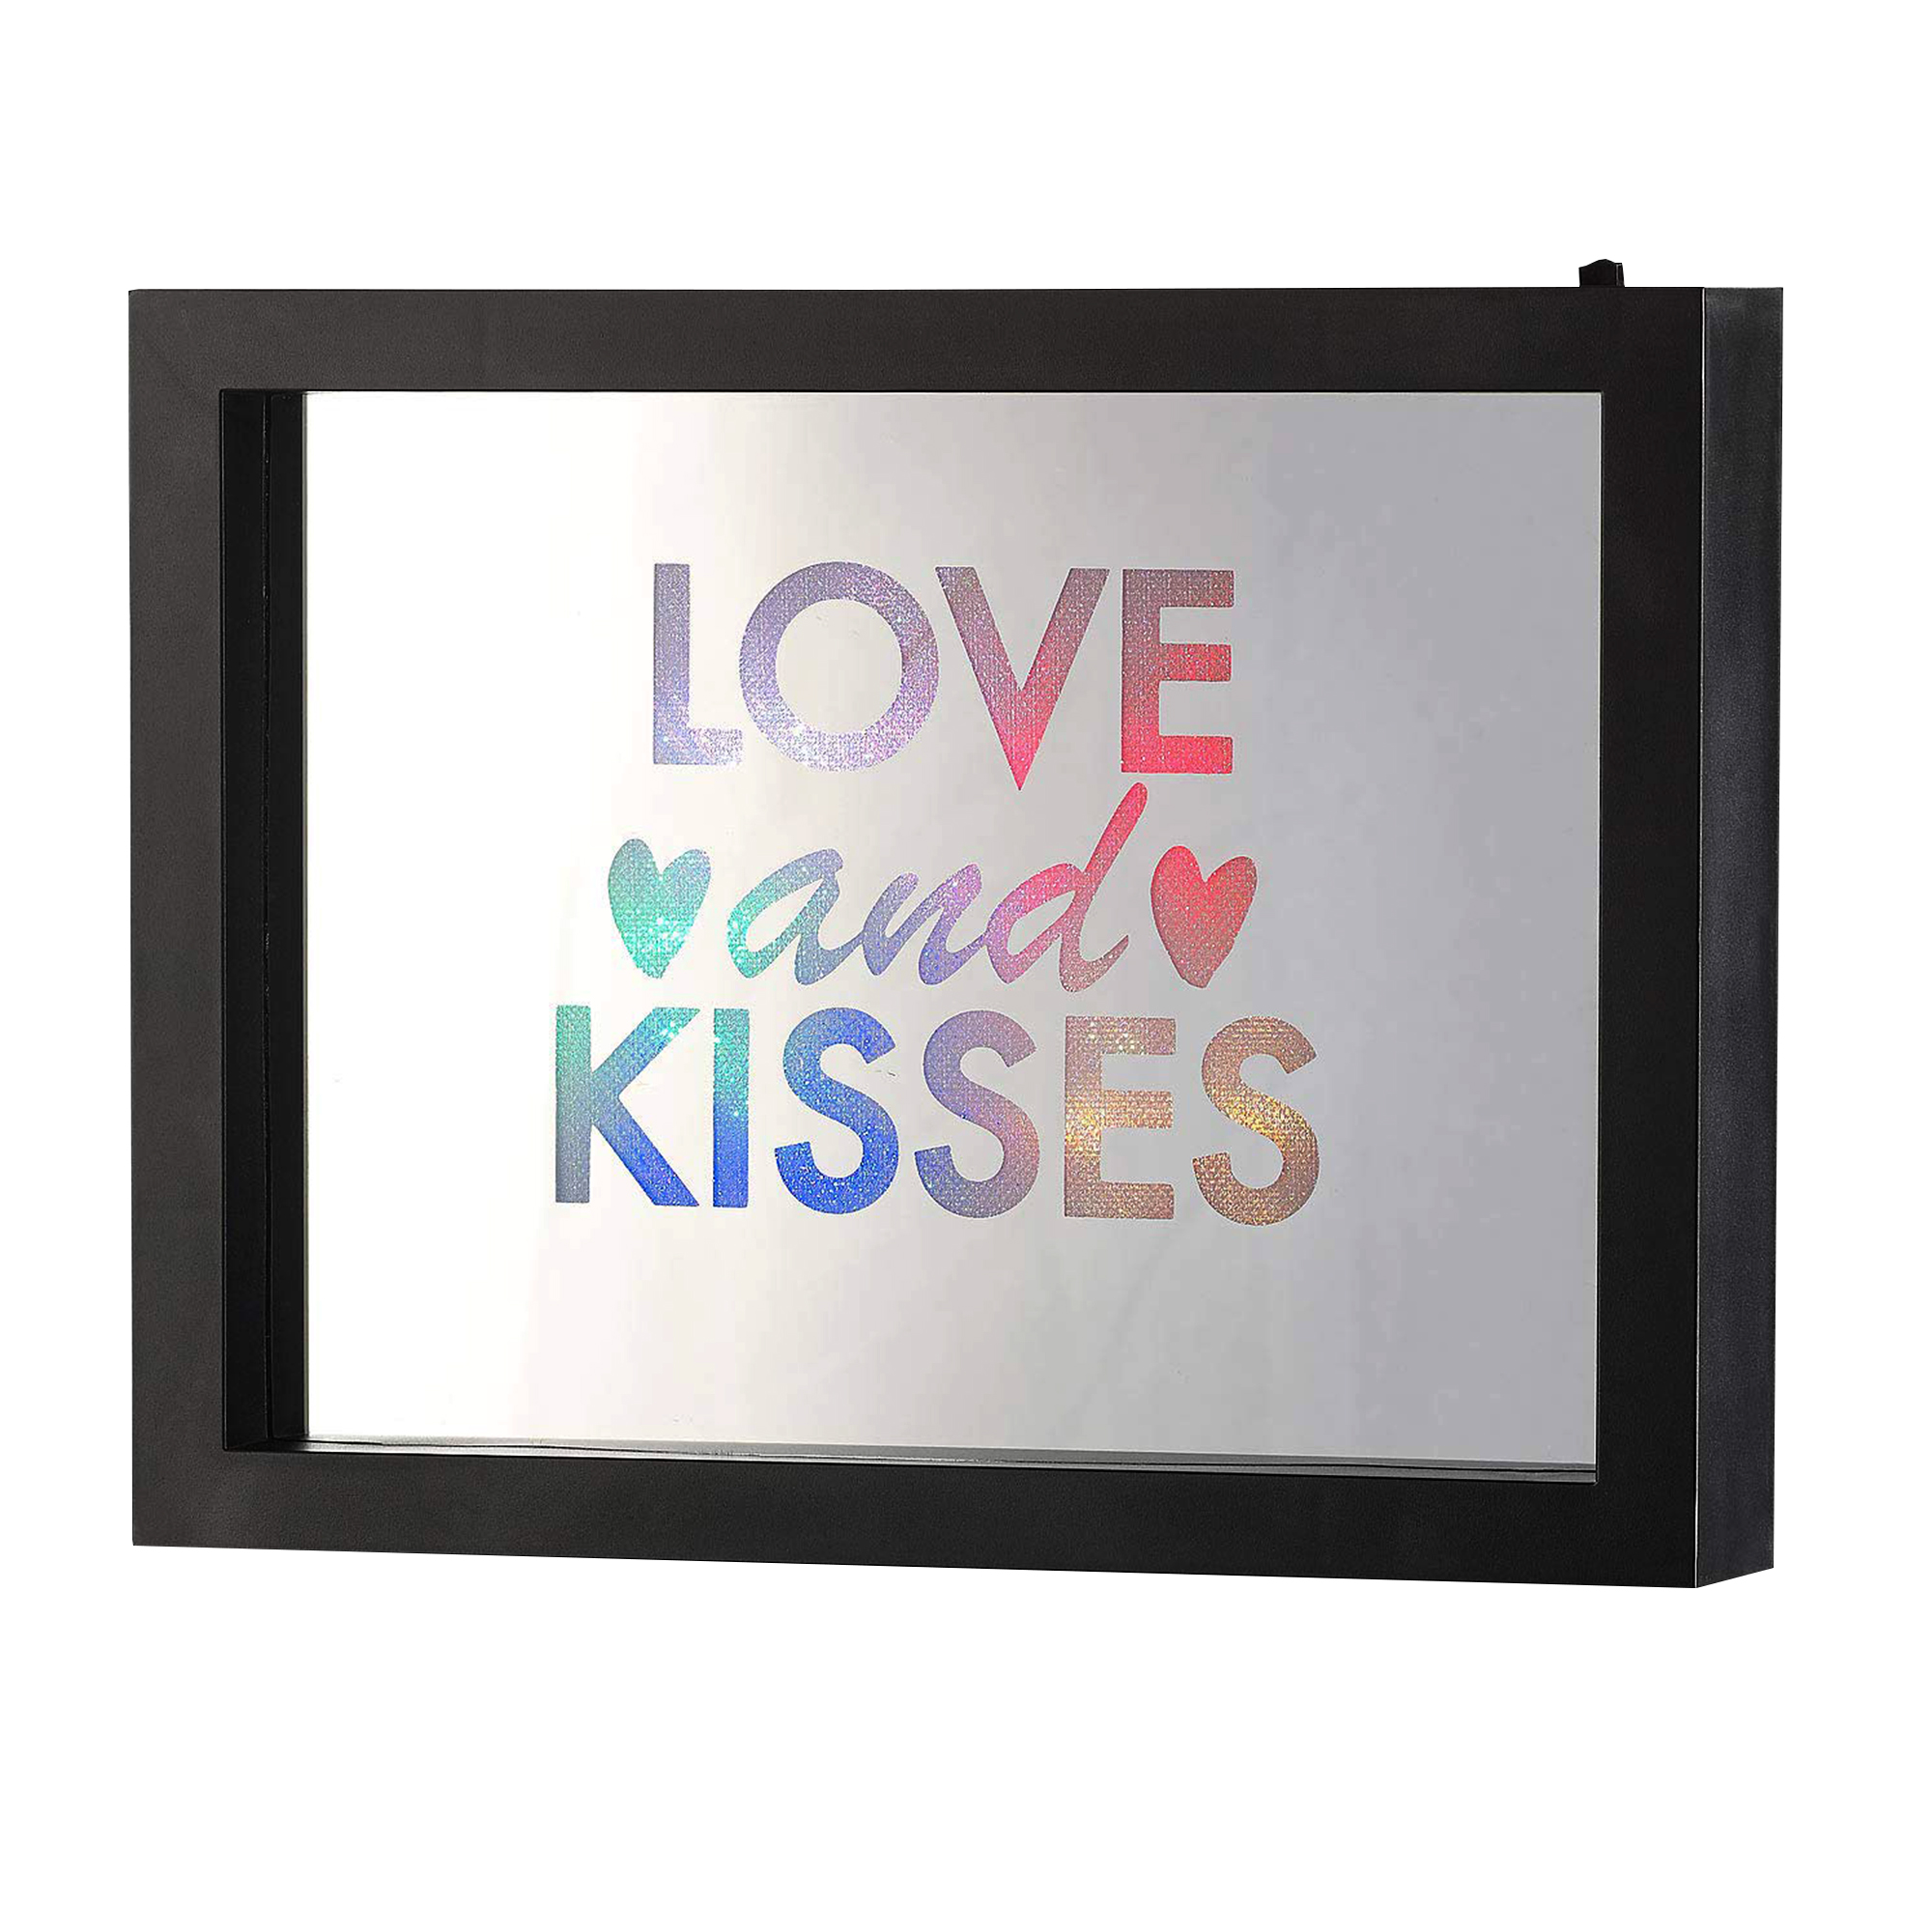 LED Rahmen mit Farbwechsel - Love And Kisses 4065 - 1